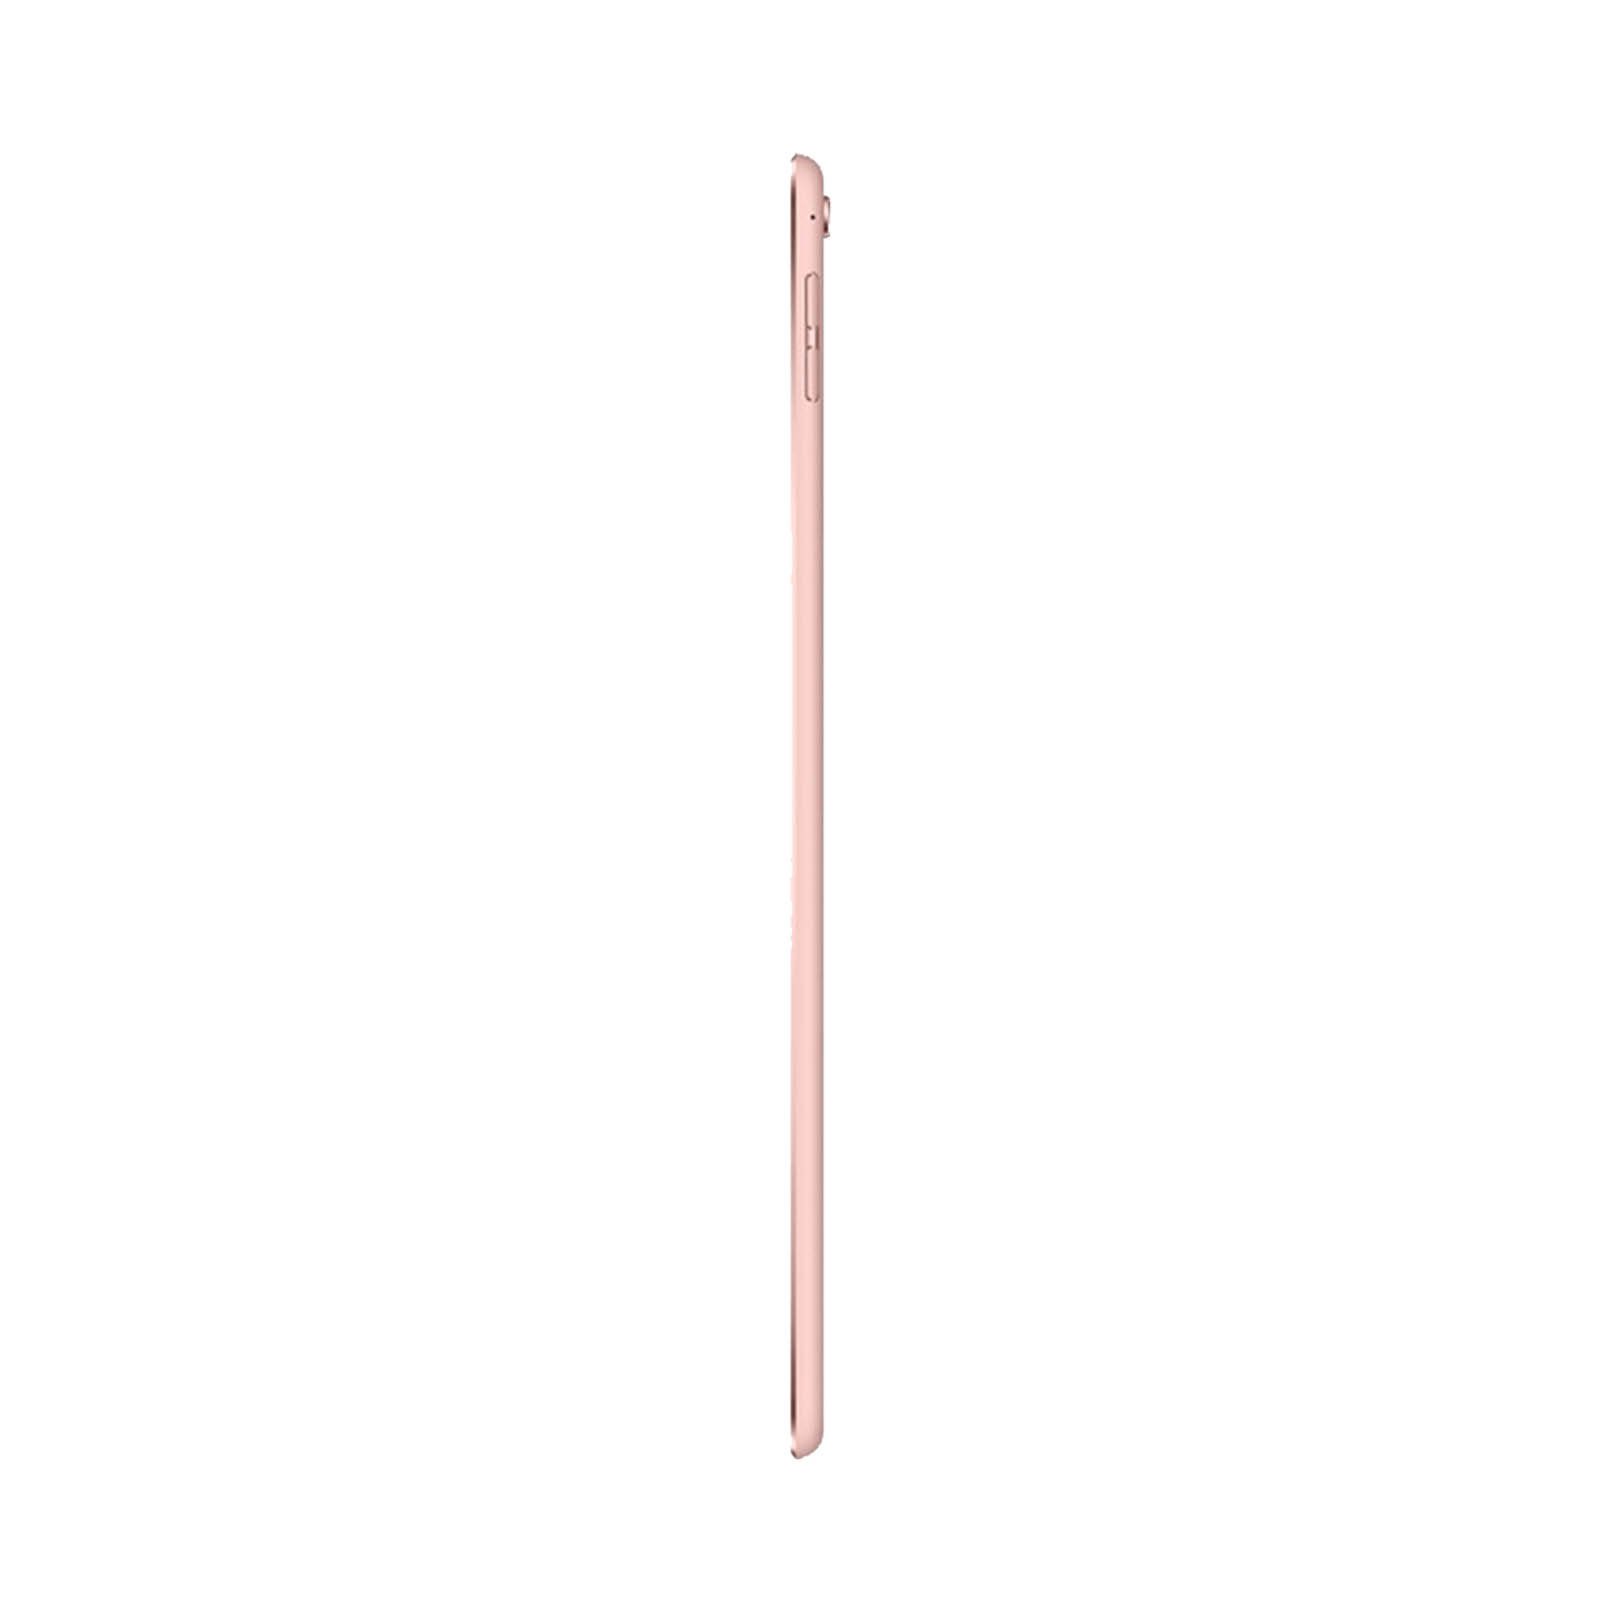 iPad Pro 9.7 Inch 32GB Rose Gold Very Good - Unlocked